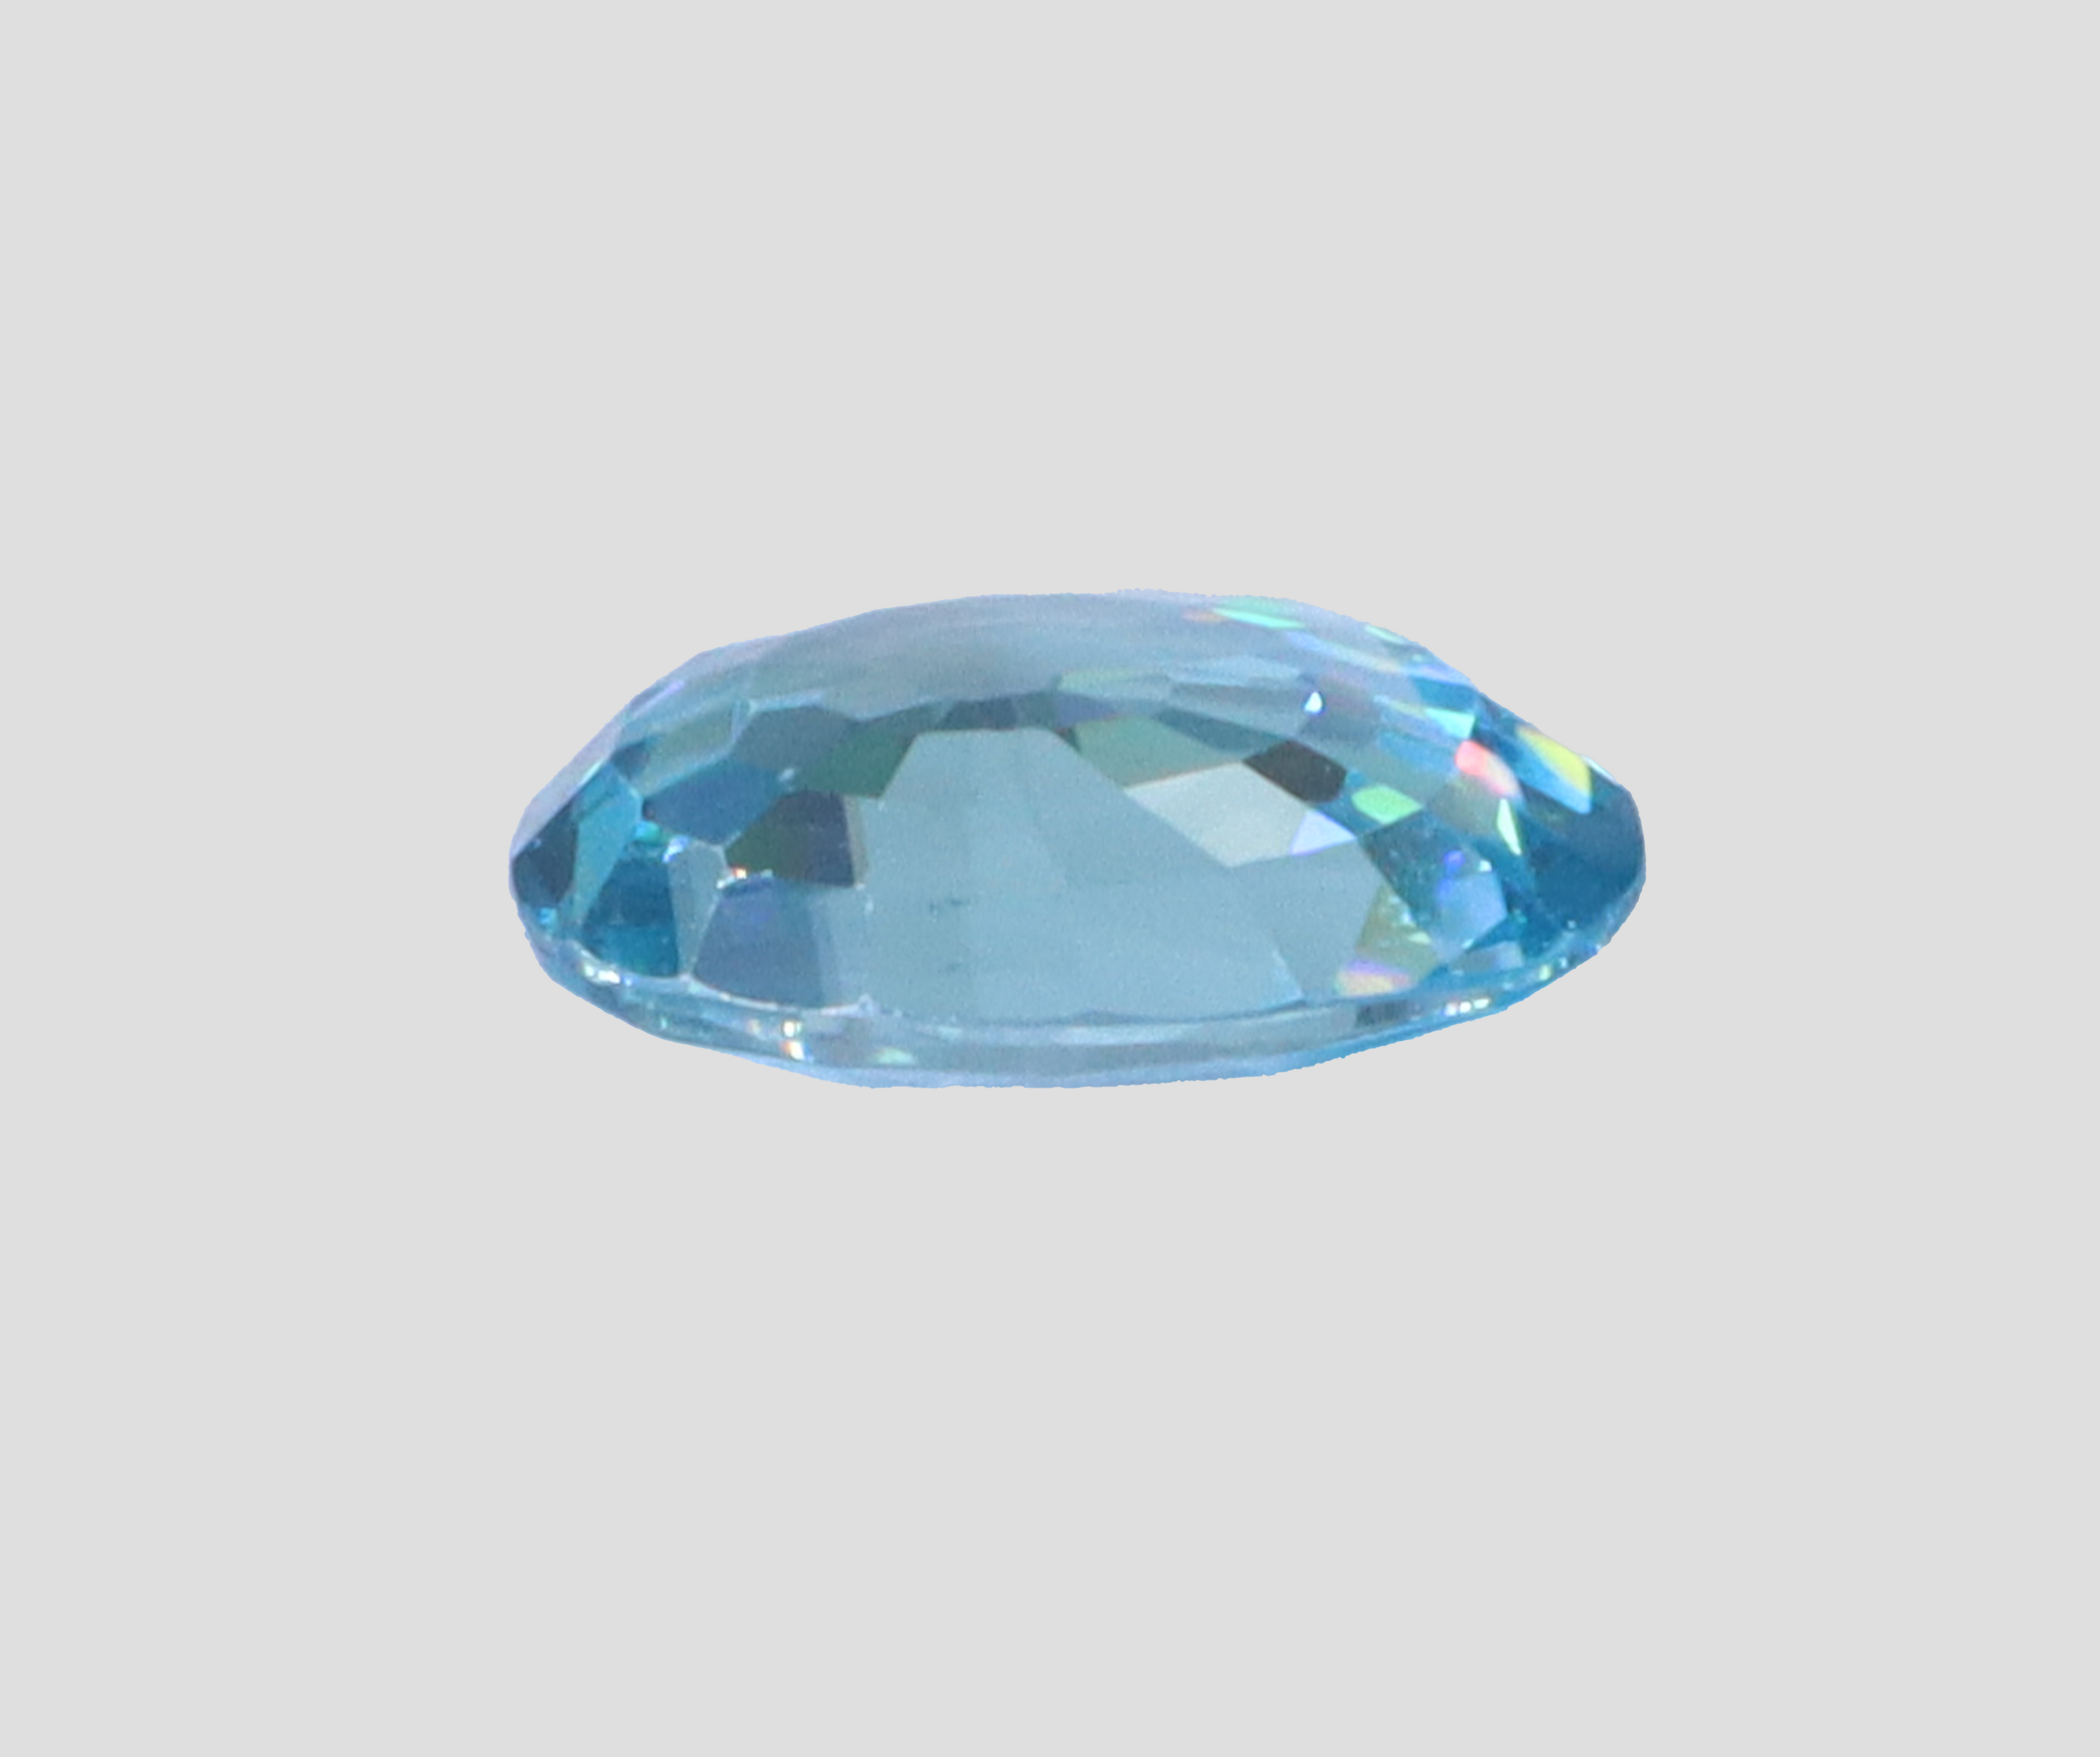 Blue Zircon - 5.83 Carats